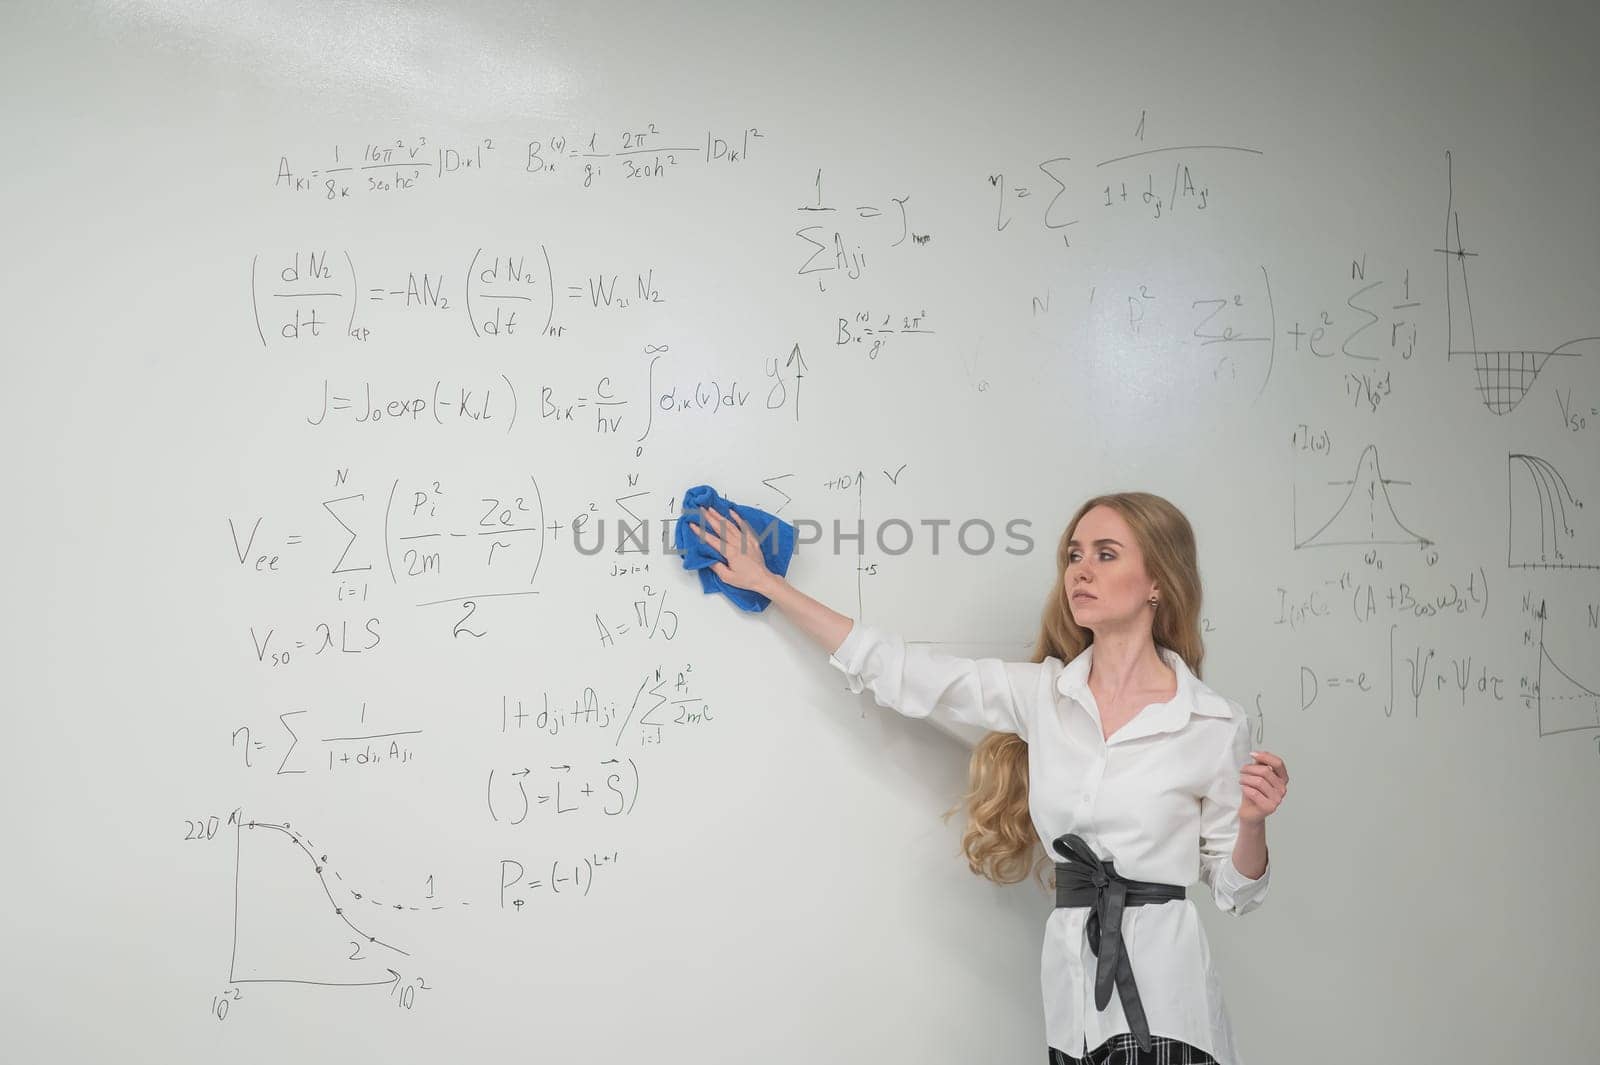 Caucasian woman erasing formulas from white board